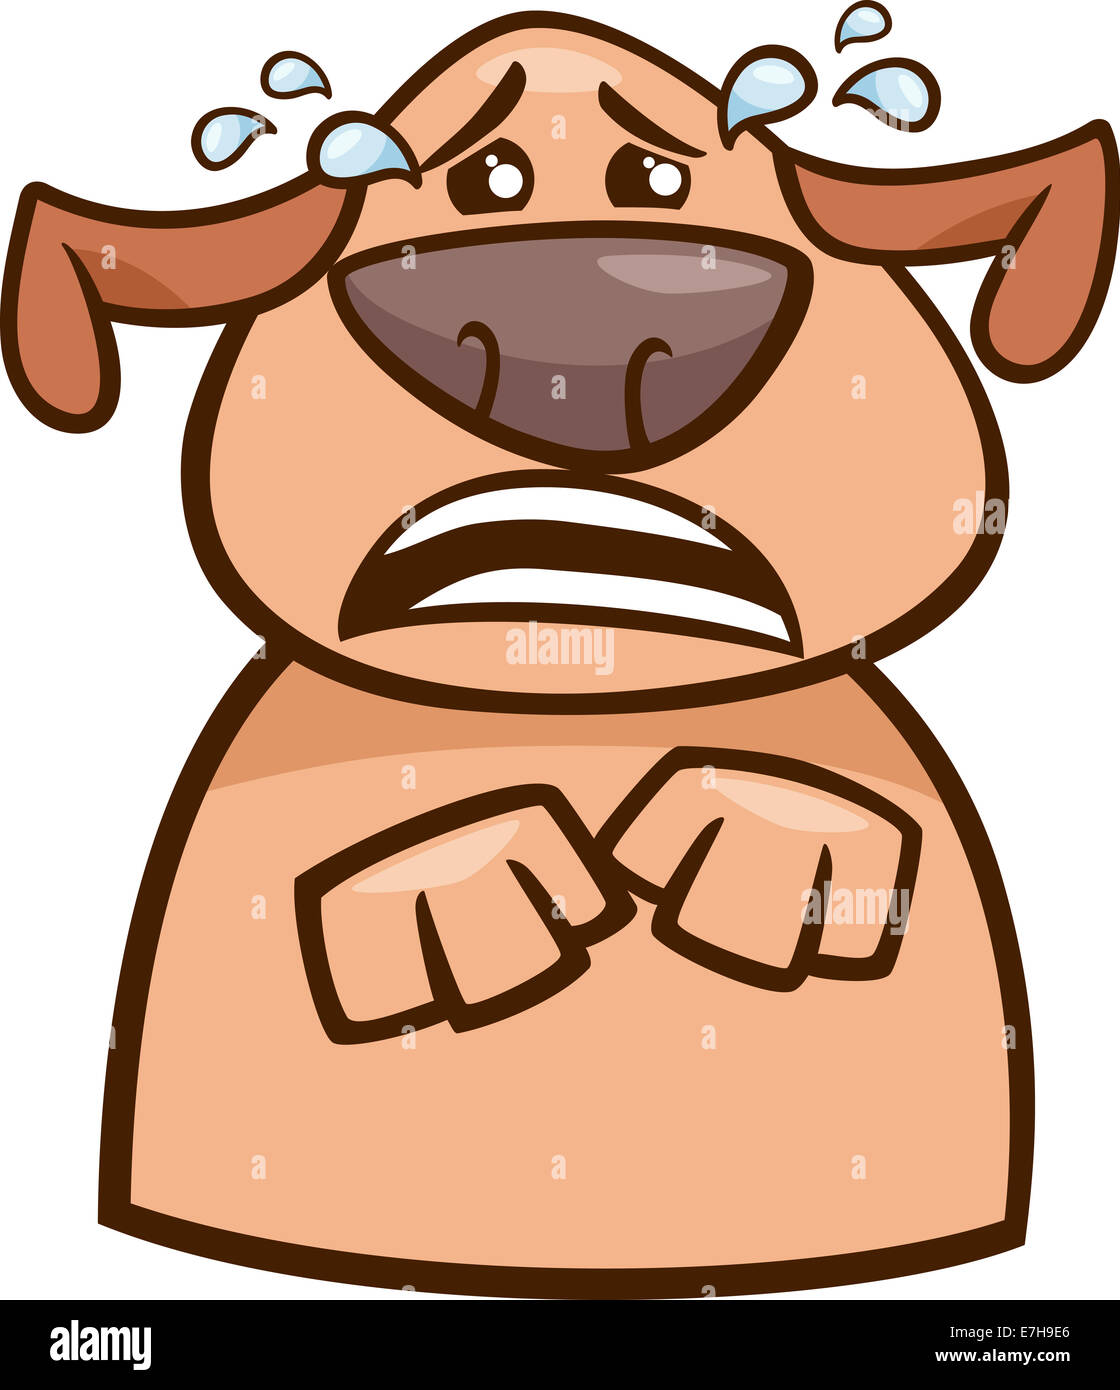 Cartoon Illustration of Funny Dog Expressing Sadness and Crying Stock Photo  - Alamy